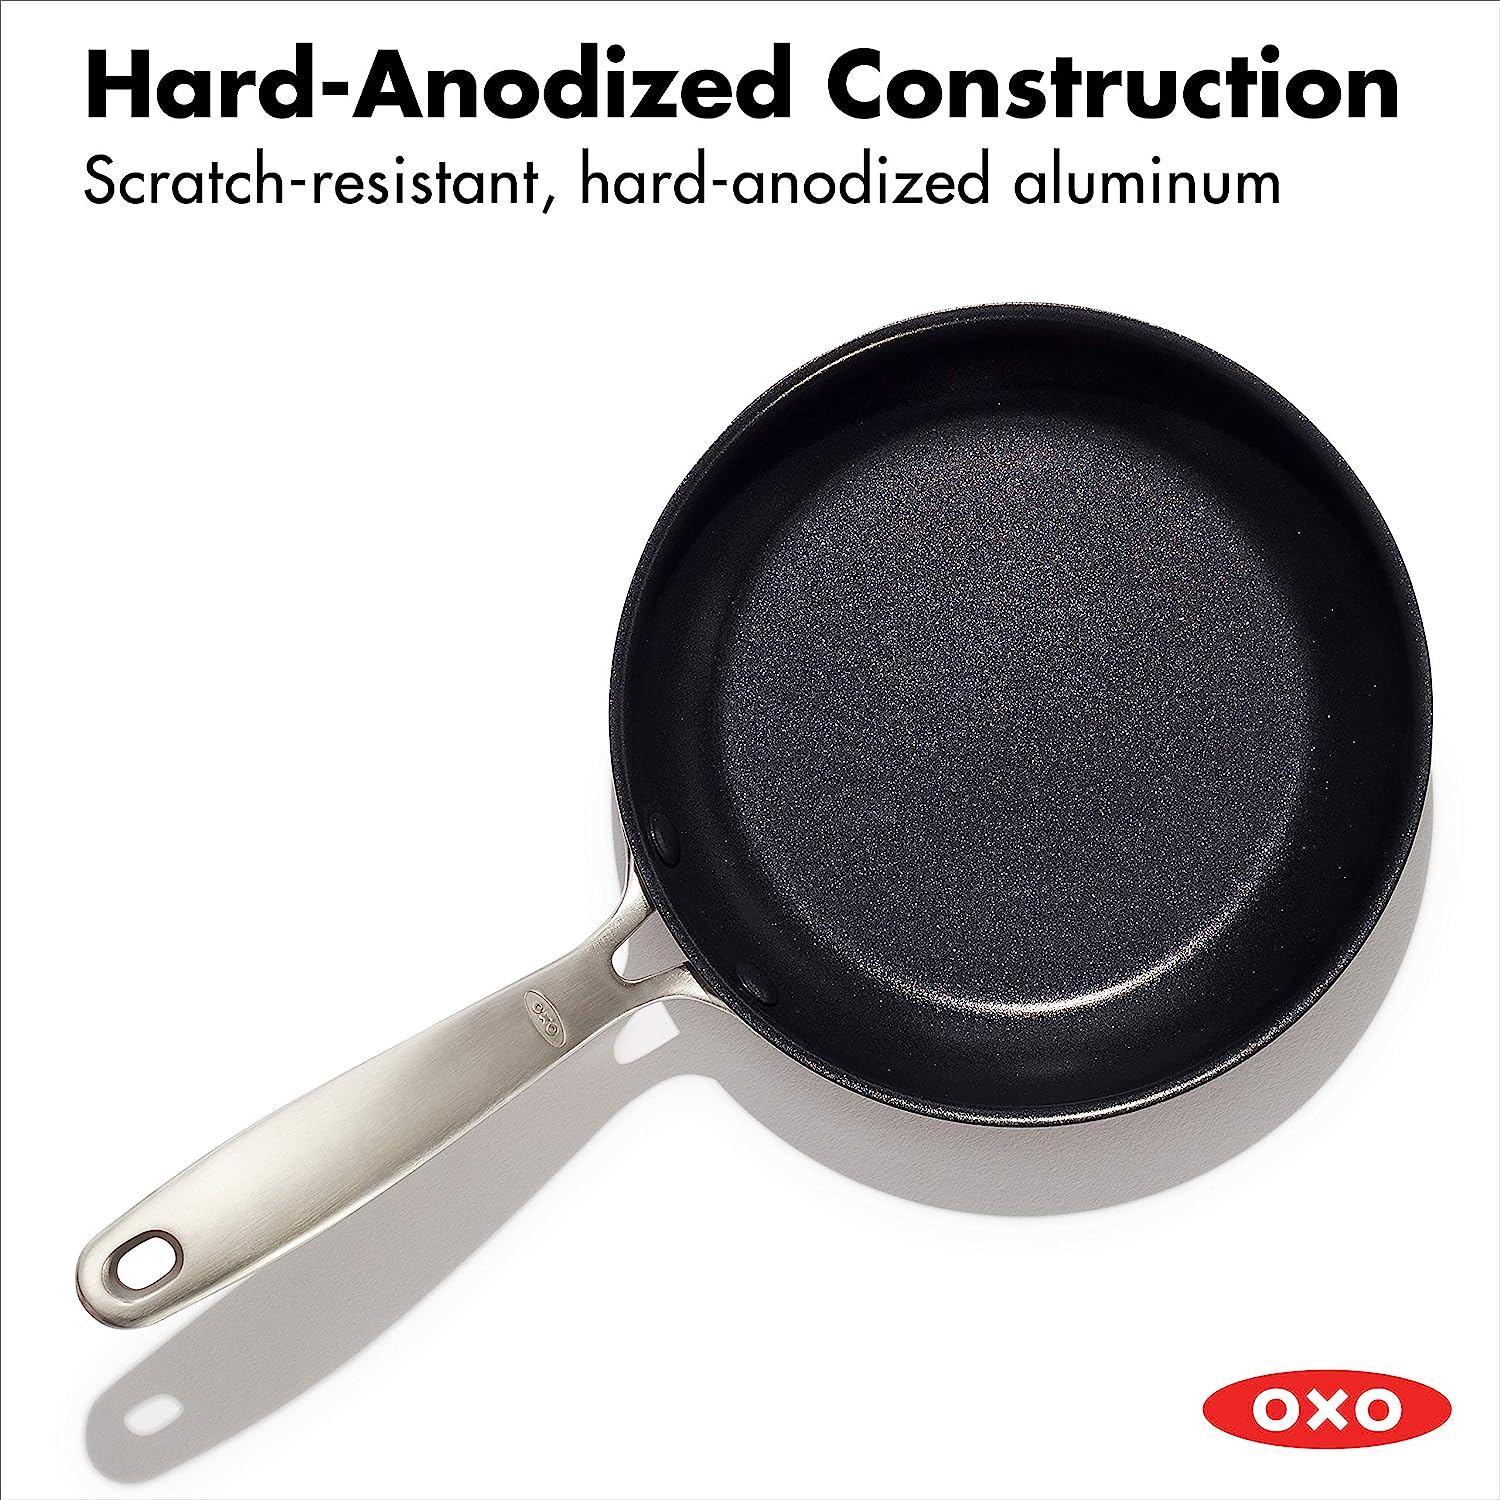 OXO Good Grips Non-Stick Frying Pan